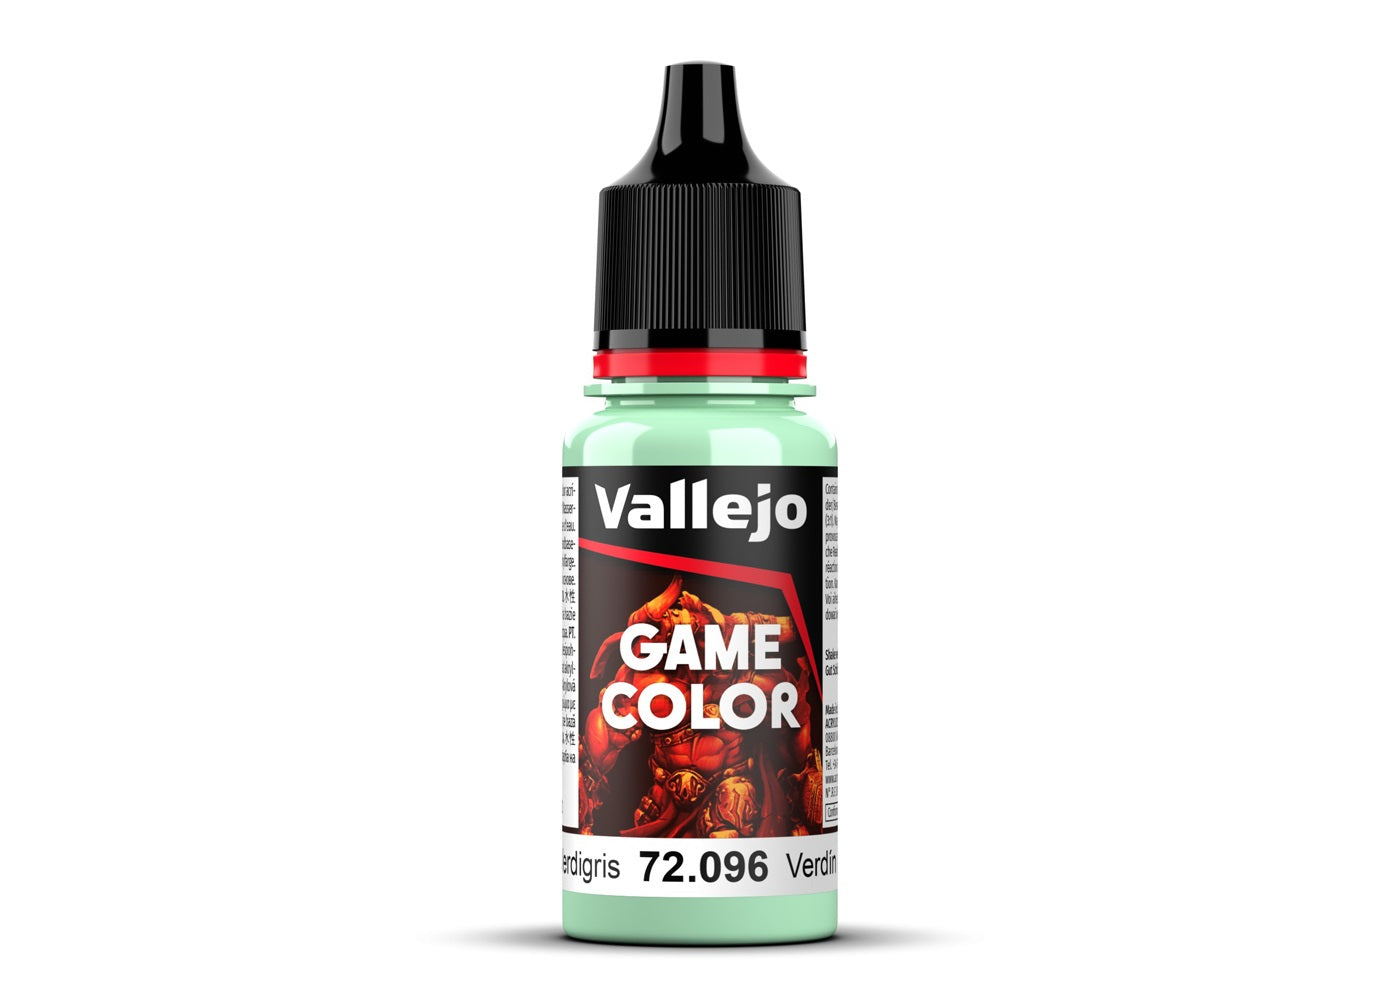 Vallejo Game Color Verdigris - 18ml